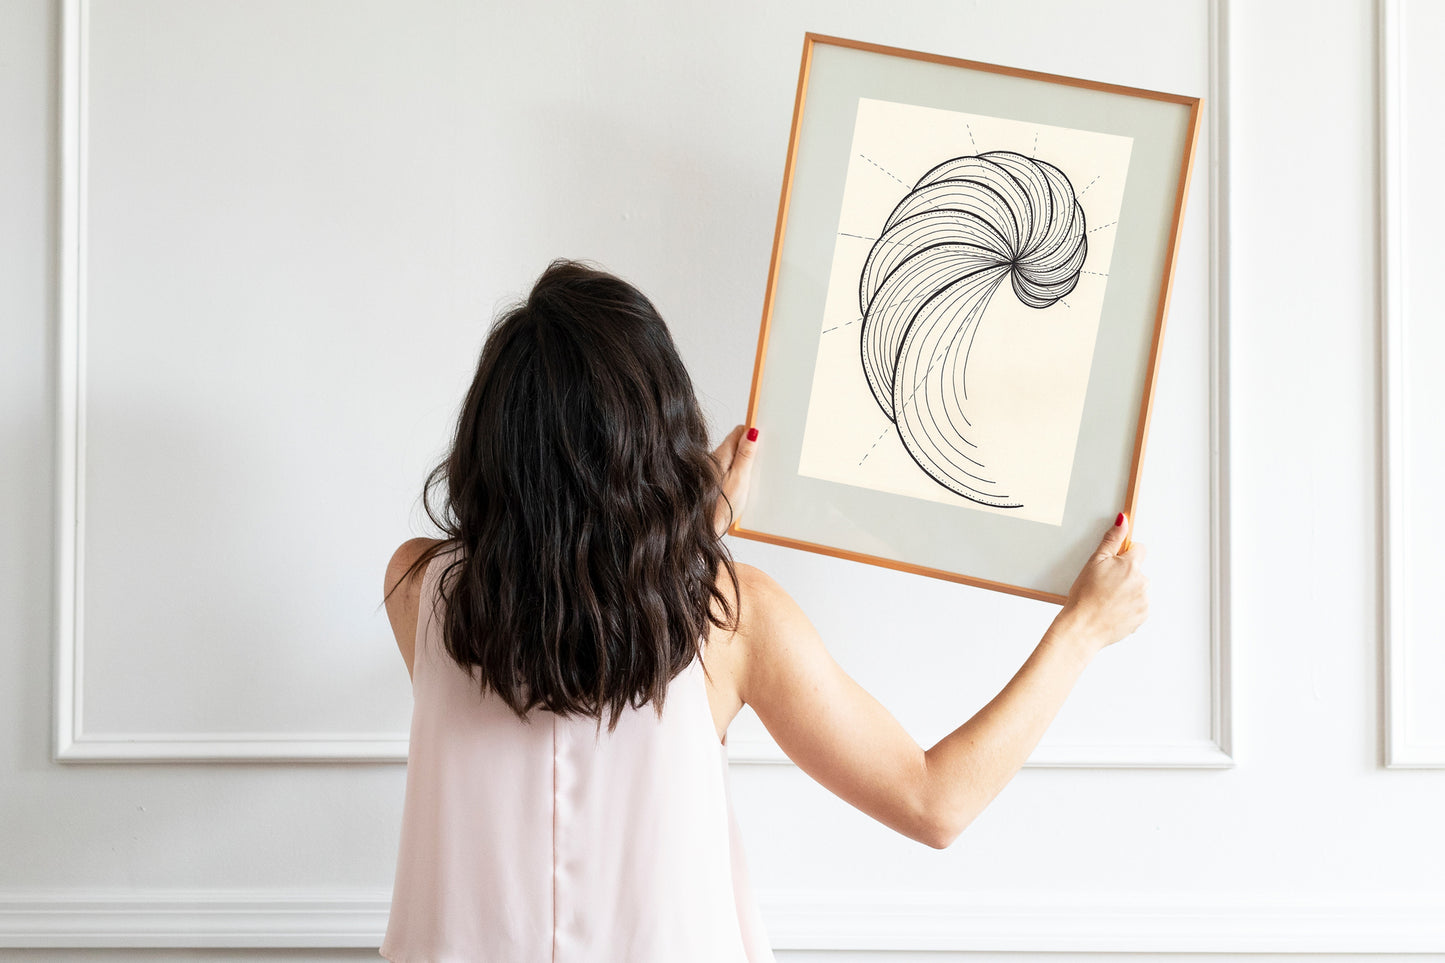 Fibonacci Spiral - Art print